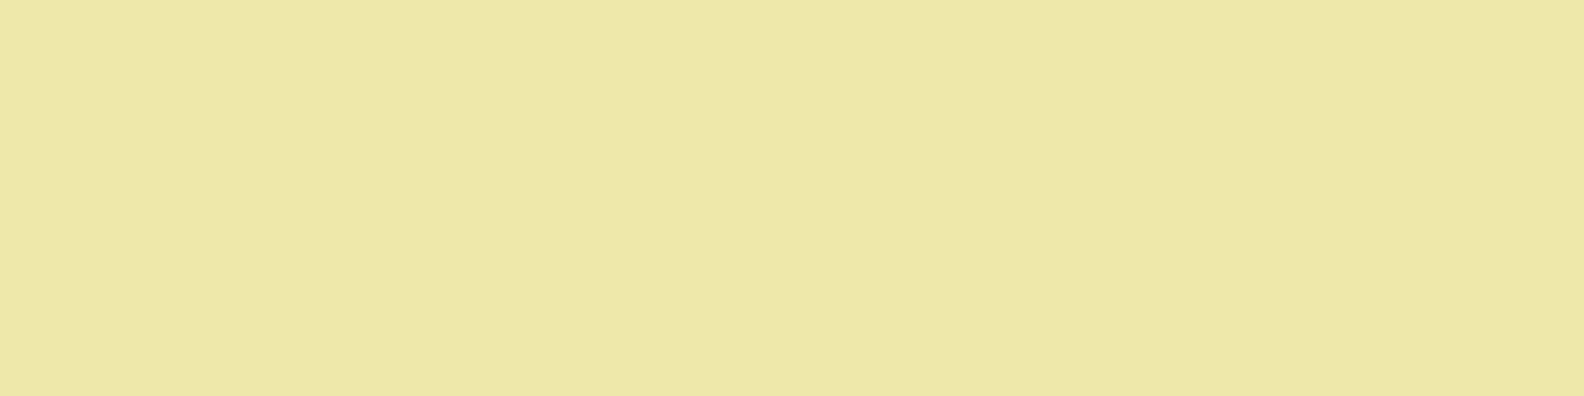 1584x396 Pale Goldenrod Solid Color Background